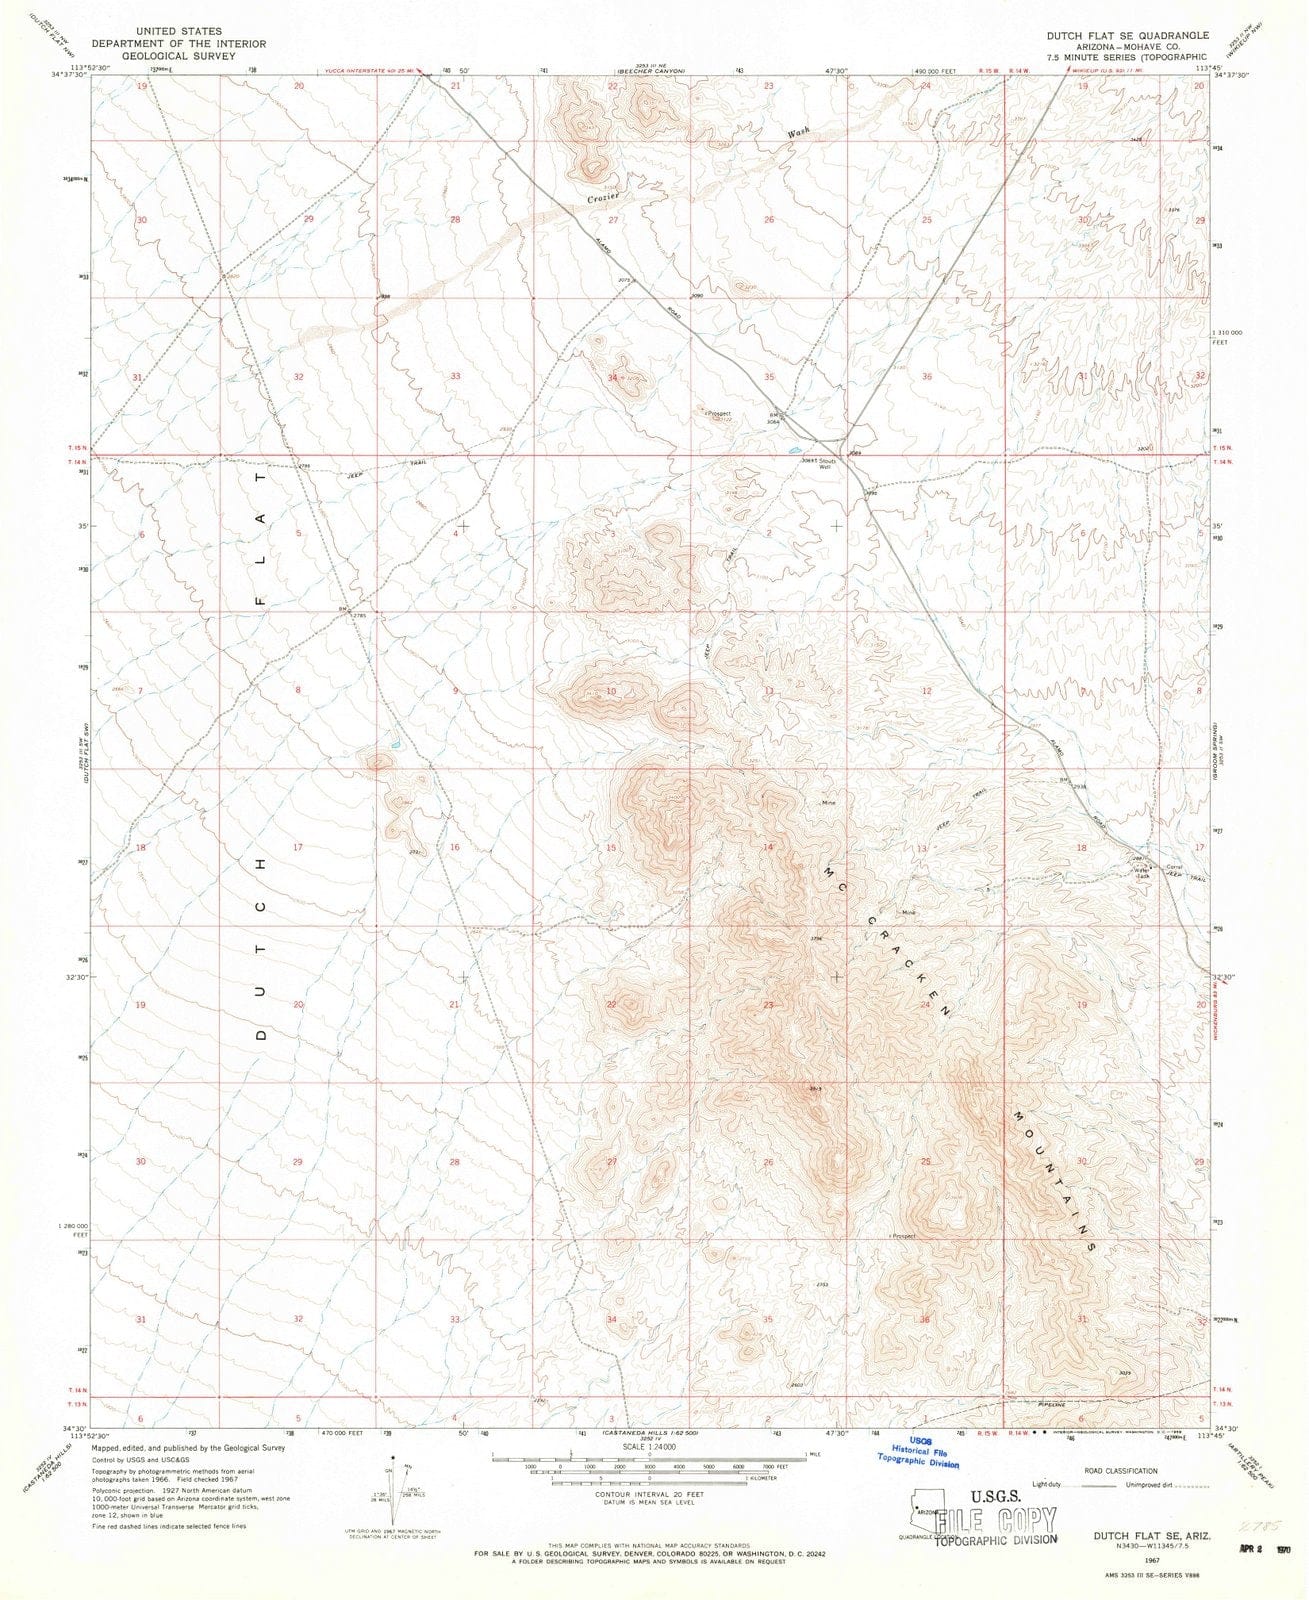 1967 Dutch Flat, AZ - Arizona - USGS Topographic Map v2